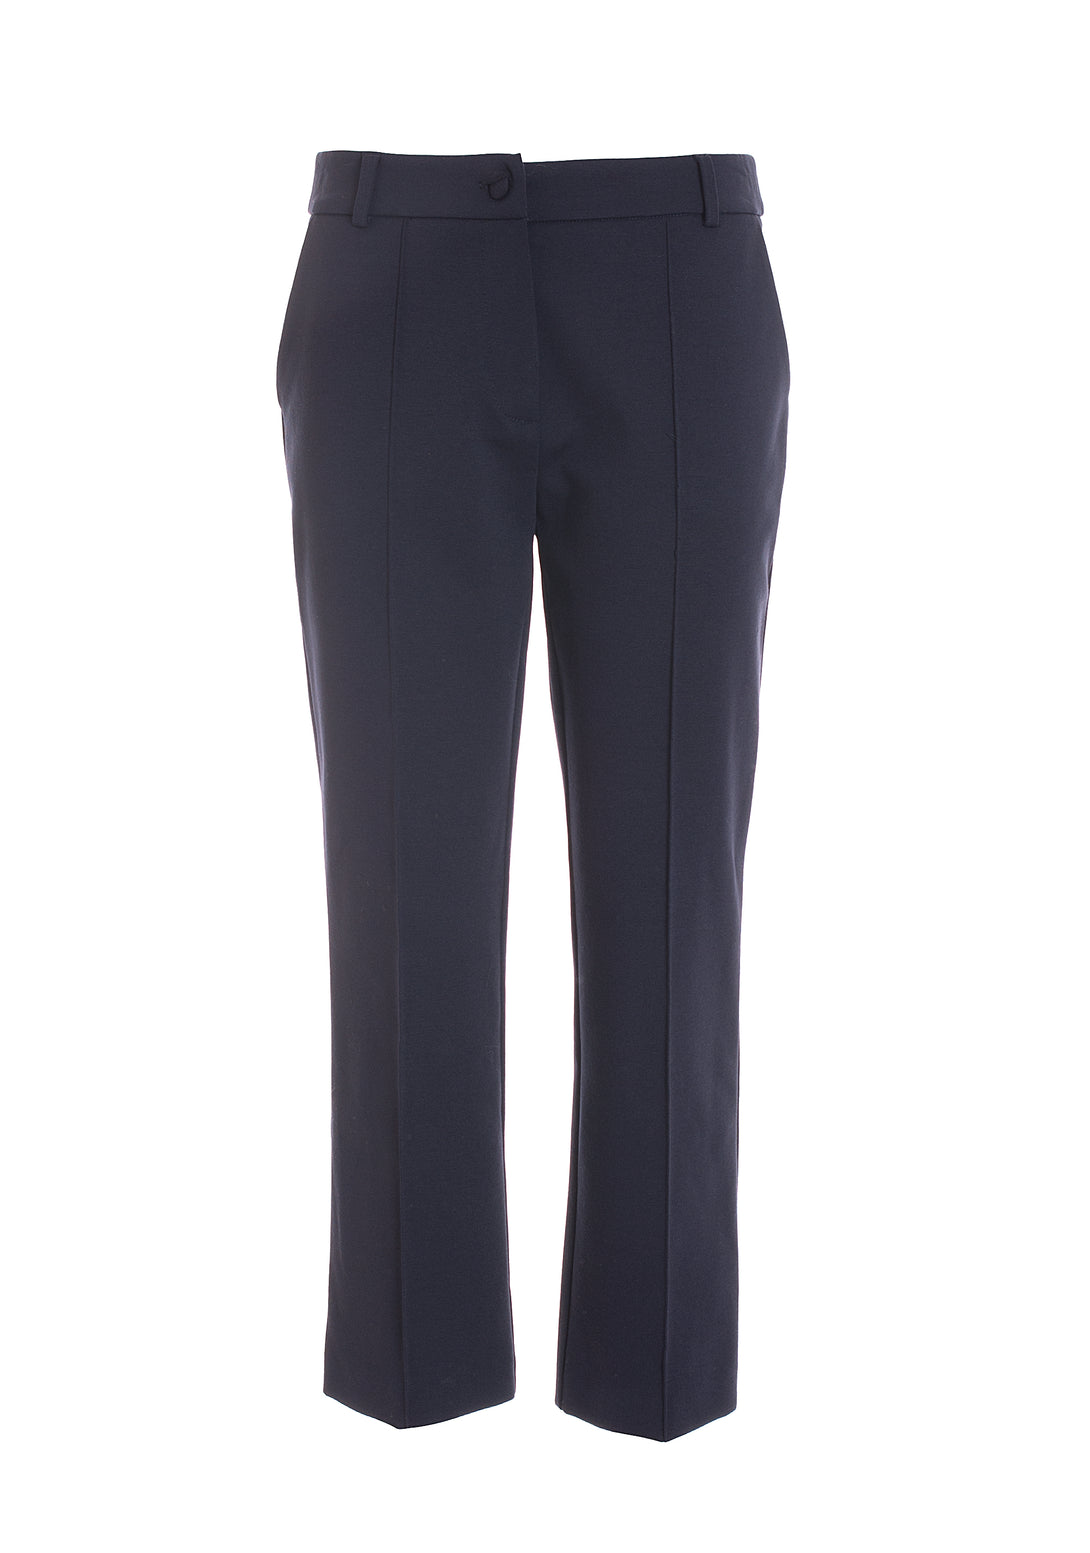 Pantalone chino regular in tessuto tecnico-FRACOMINA-FR22WV4012W49701-053-FP-36